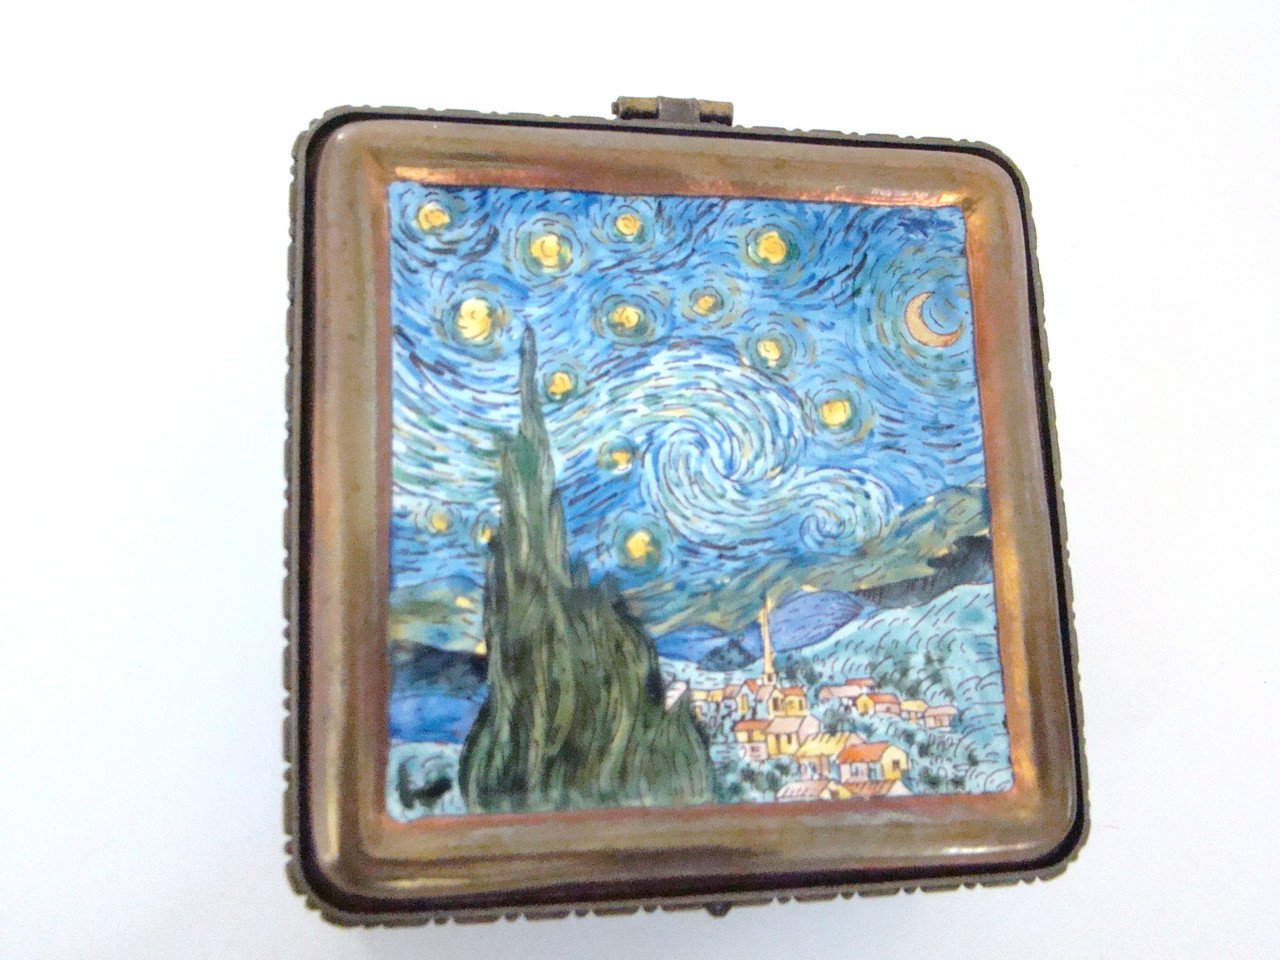 Kelvin Chen Vincent Van Gogh Stary Night Notepad Holder Hinged Box (EY3C3)